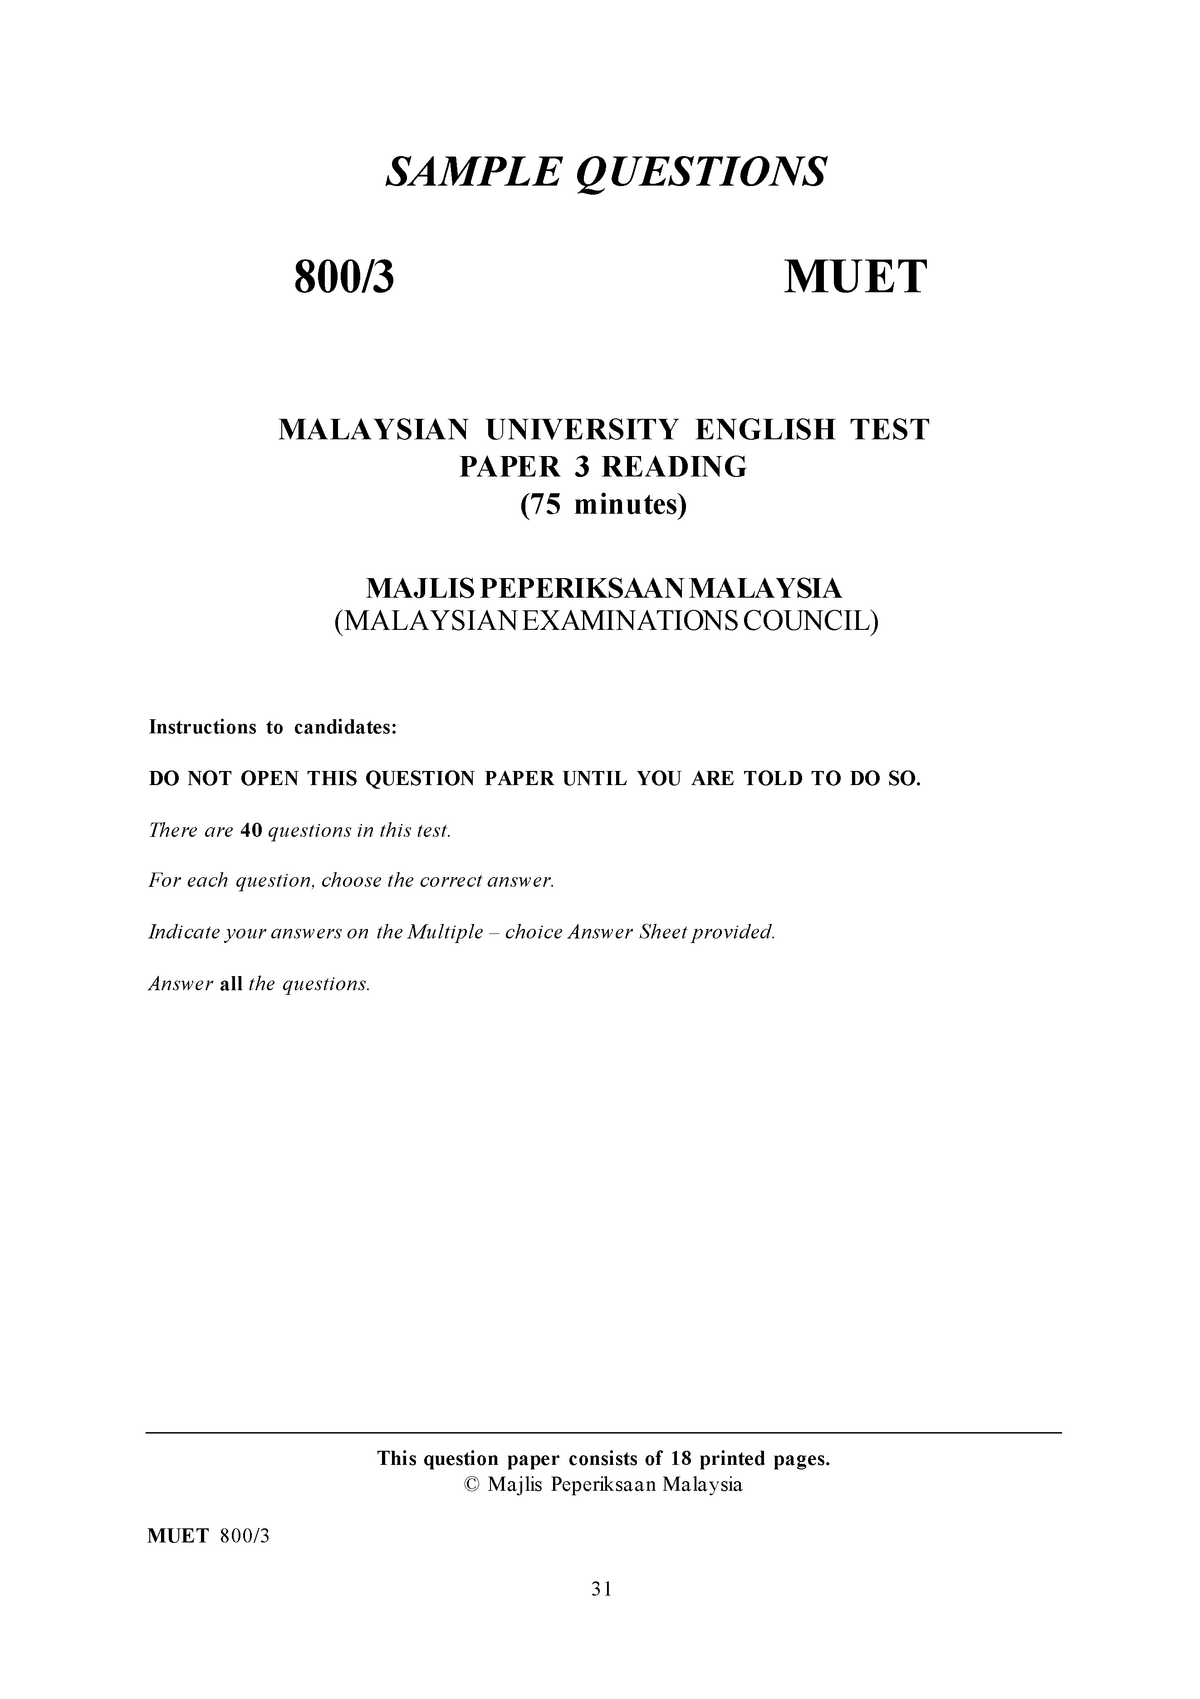 MUET Reading MPM - muet - MUET 800/ 3 SAMPLE QUESTIONS 800/3 MUET